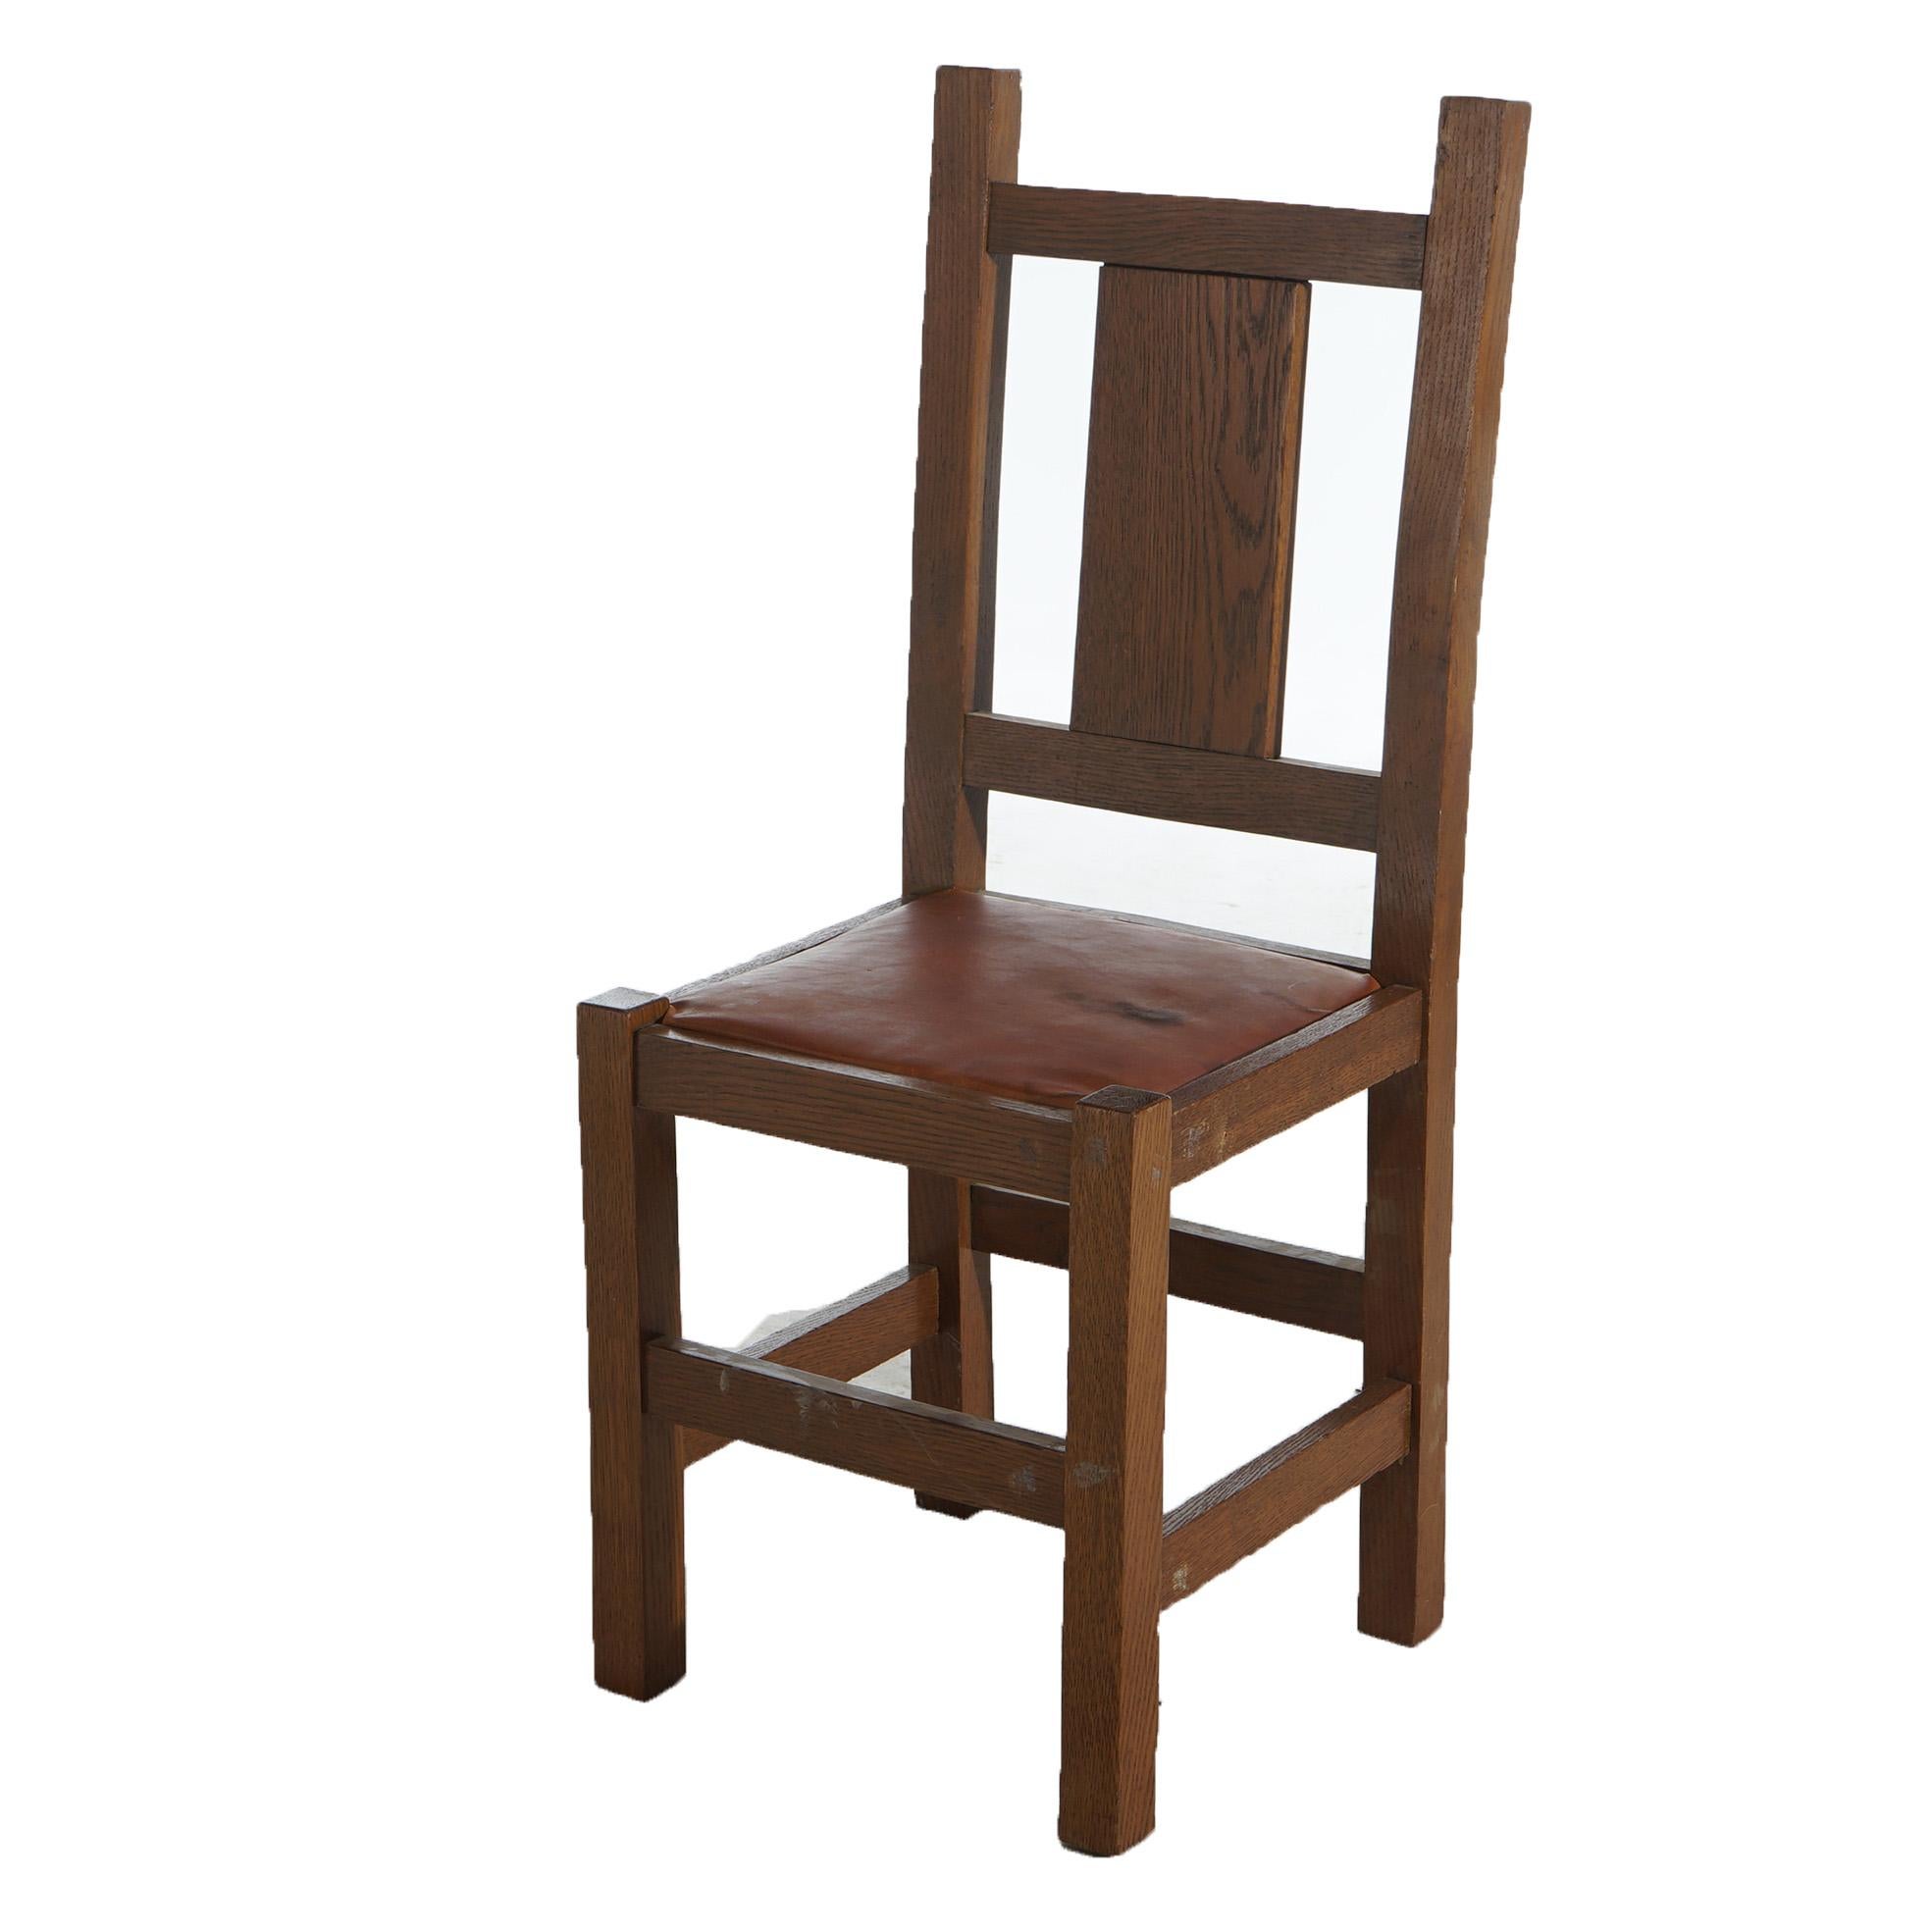 Set of Four Antique Arts & Crafts Roycroft School Mission Oak Dining Chairs with Slat Backs Circa 1910

Measures- 40''H x 18.75''W x 17.5''D; 18.5''SH